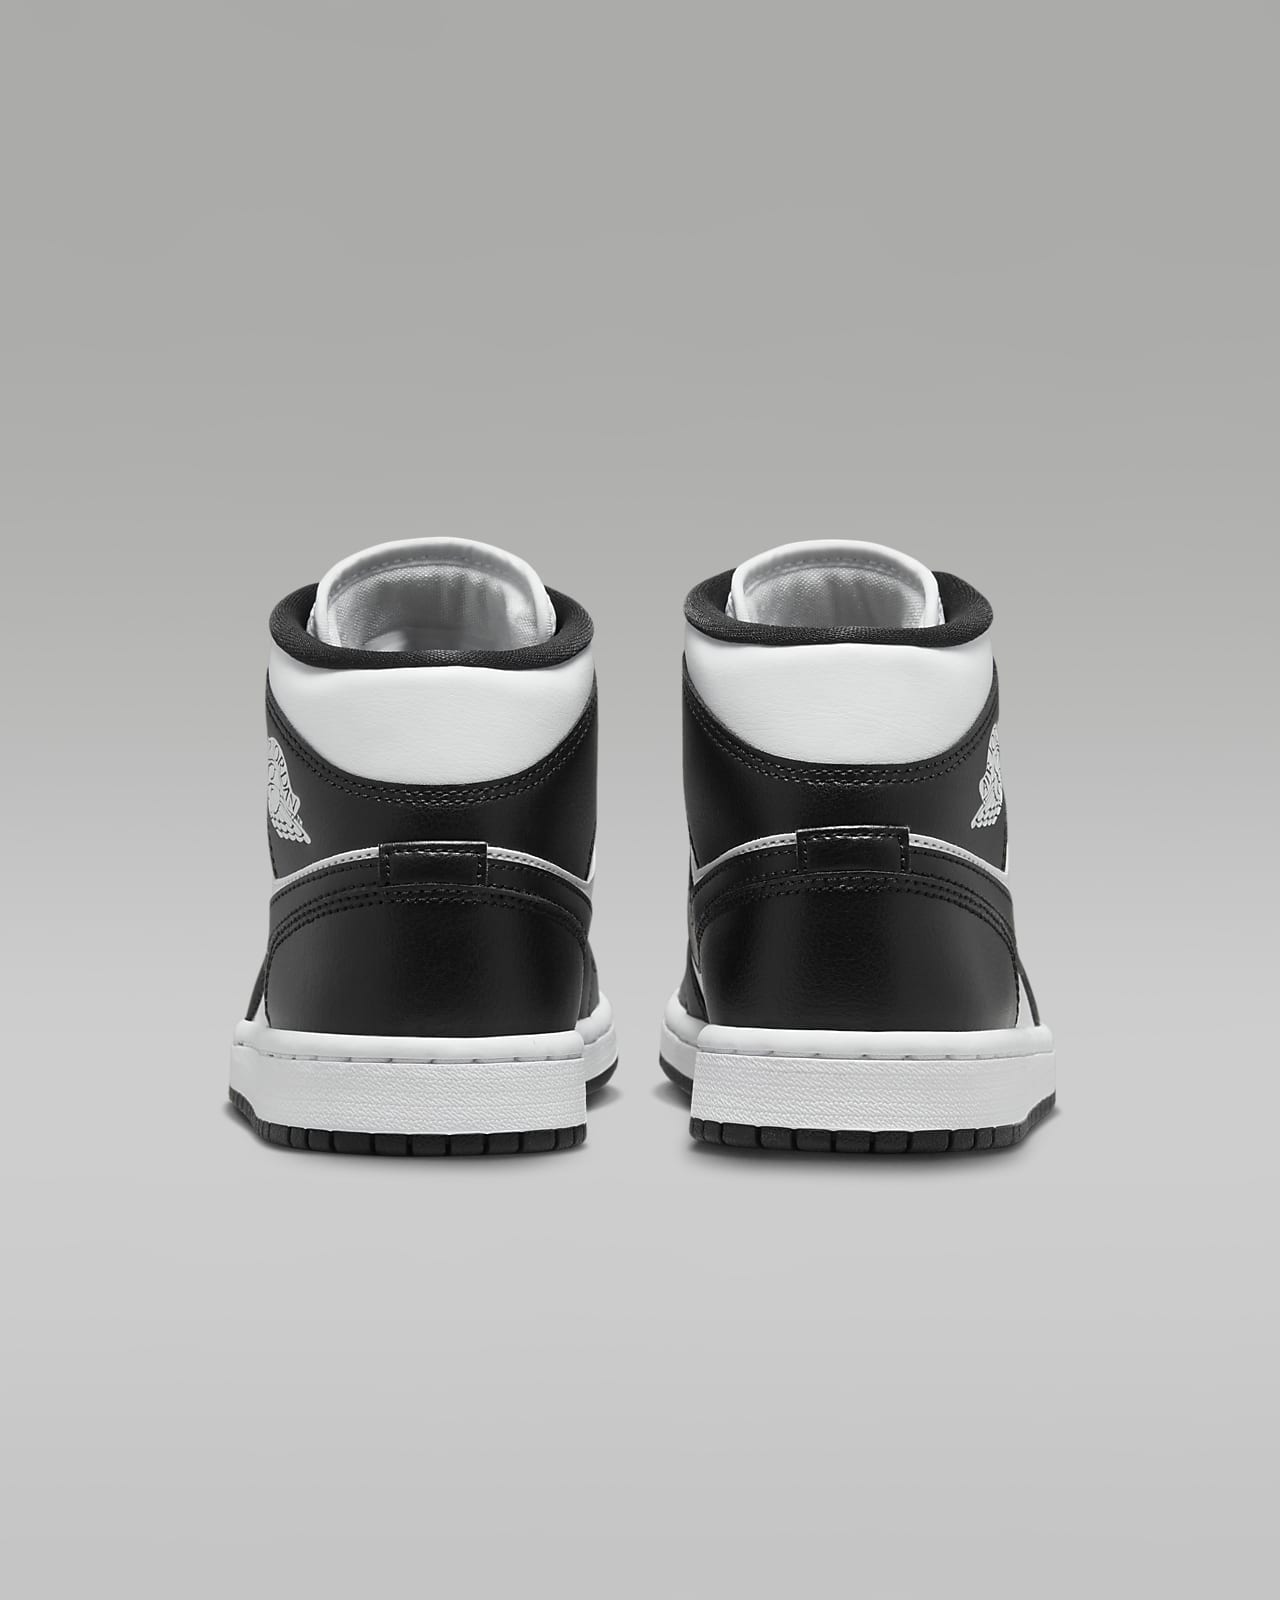 Air Jordan 1 Mid Women's Shoes, by Nike Size 8 (White)